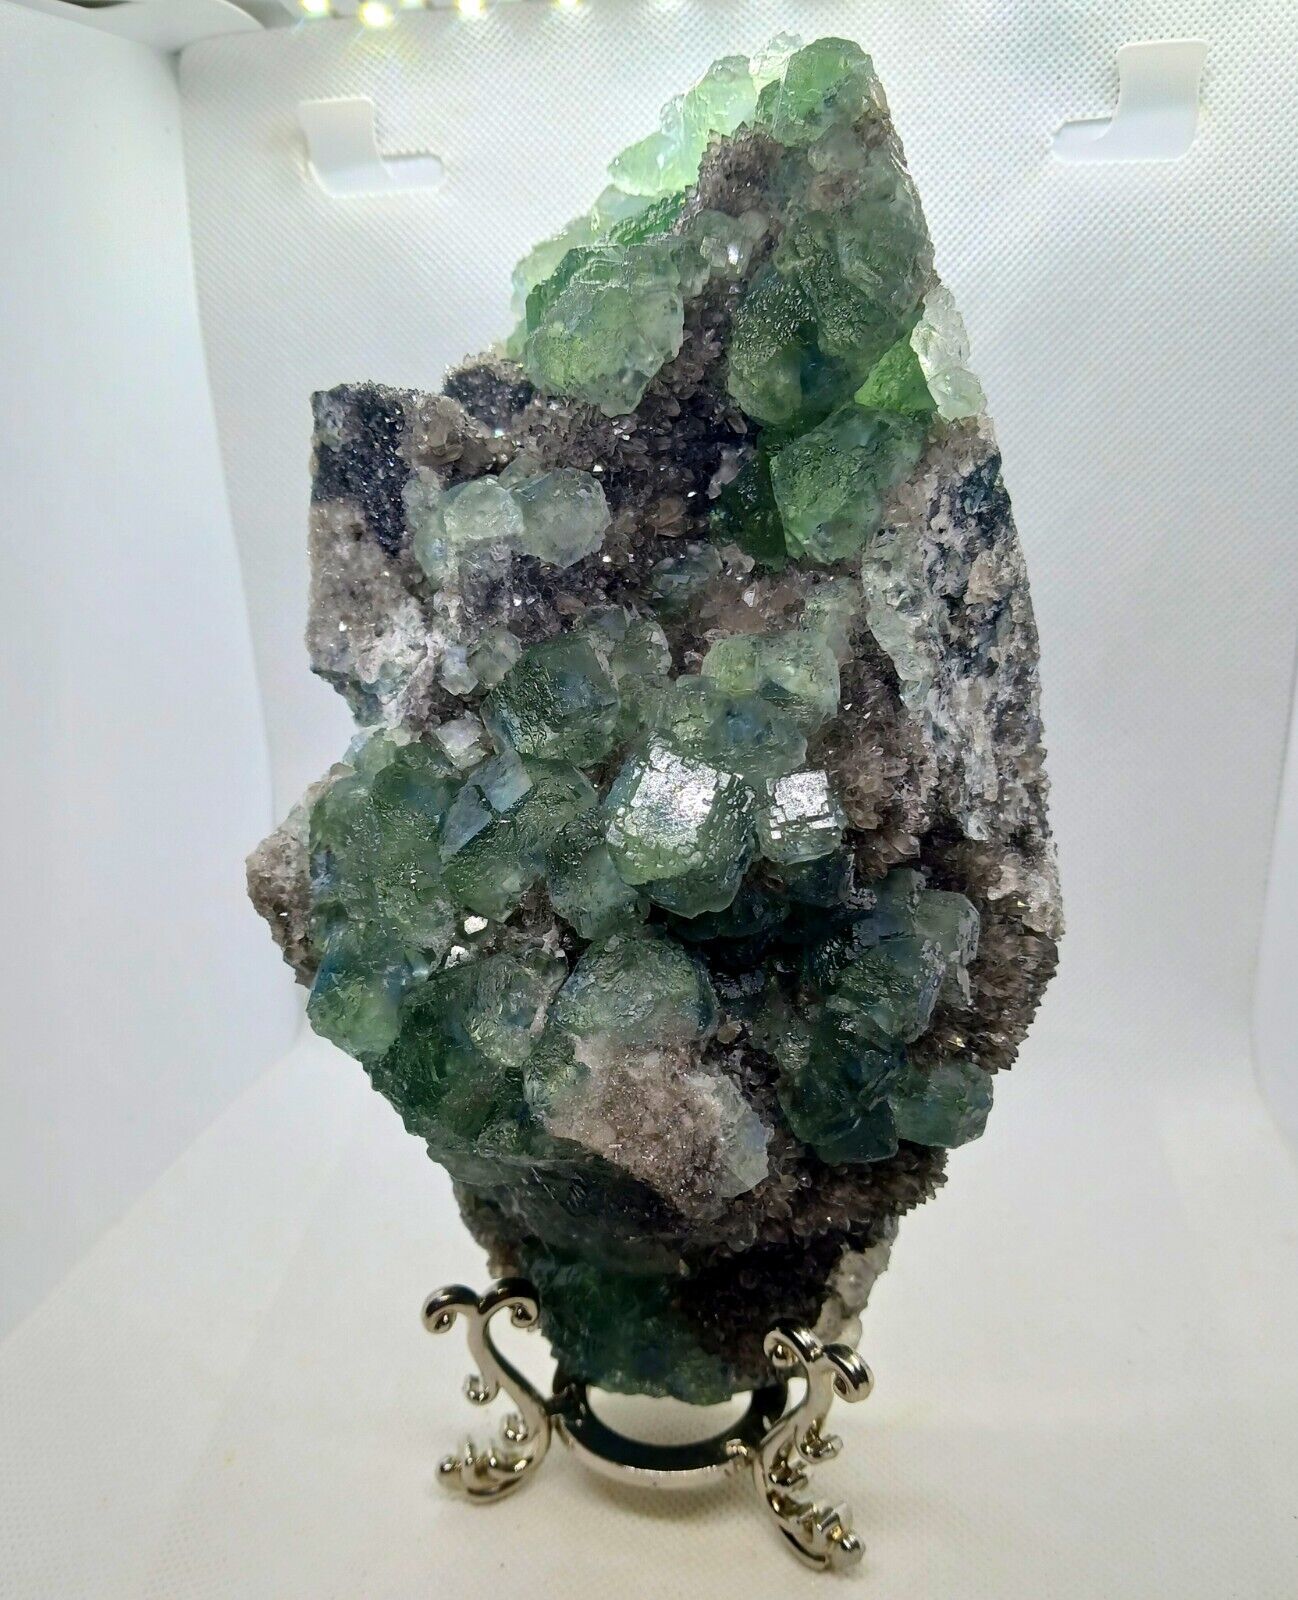 Xl Fluorite With Smokey Quartz Large Green Fluorite Crystal Specimen 4 lbs 